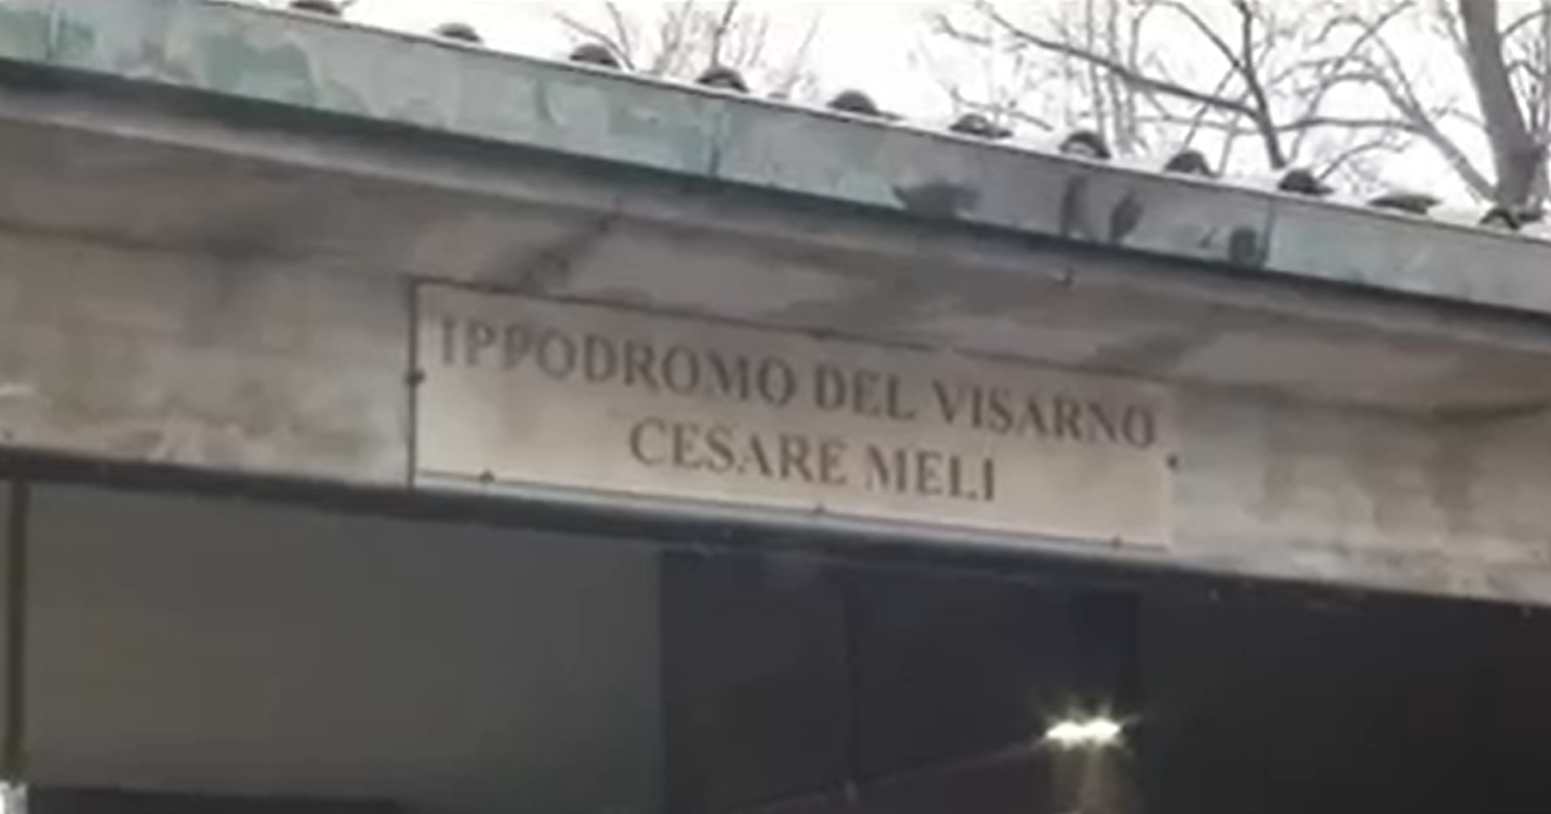 Ippodromo-del-visarno-cesare-meli.png